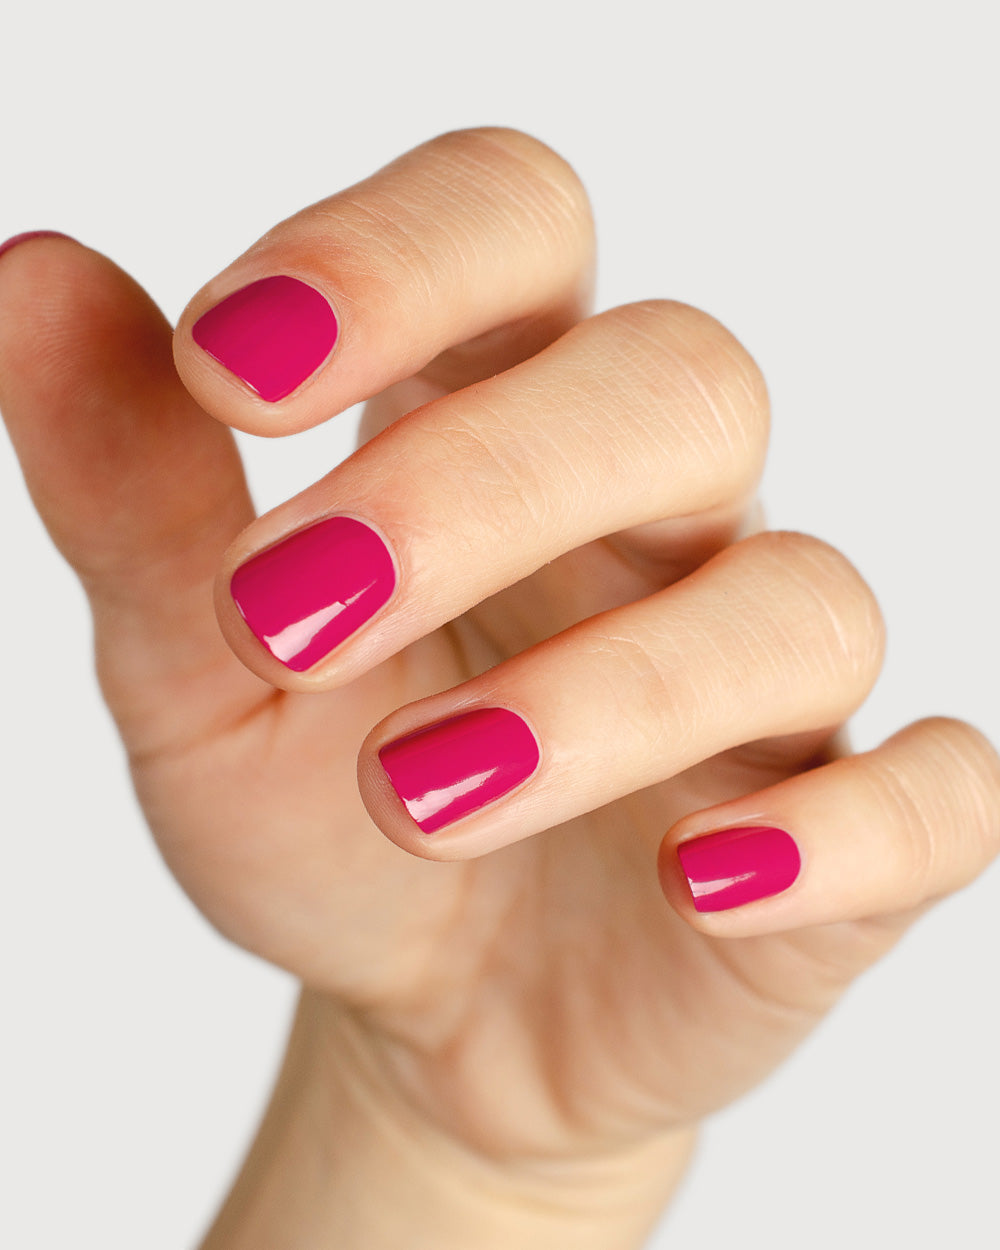 fuschia pink nail polish hand swatch on fair skin tone up close